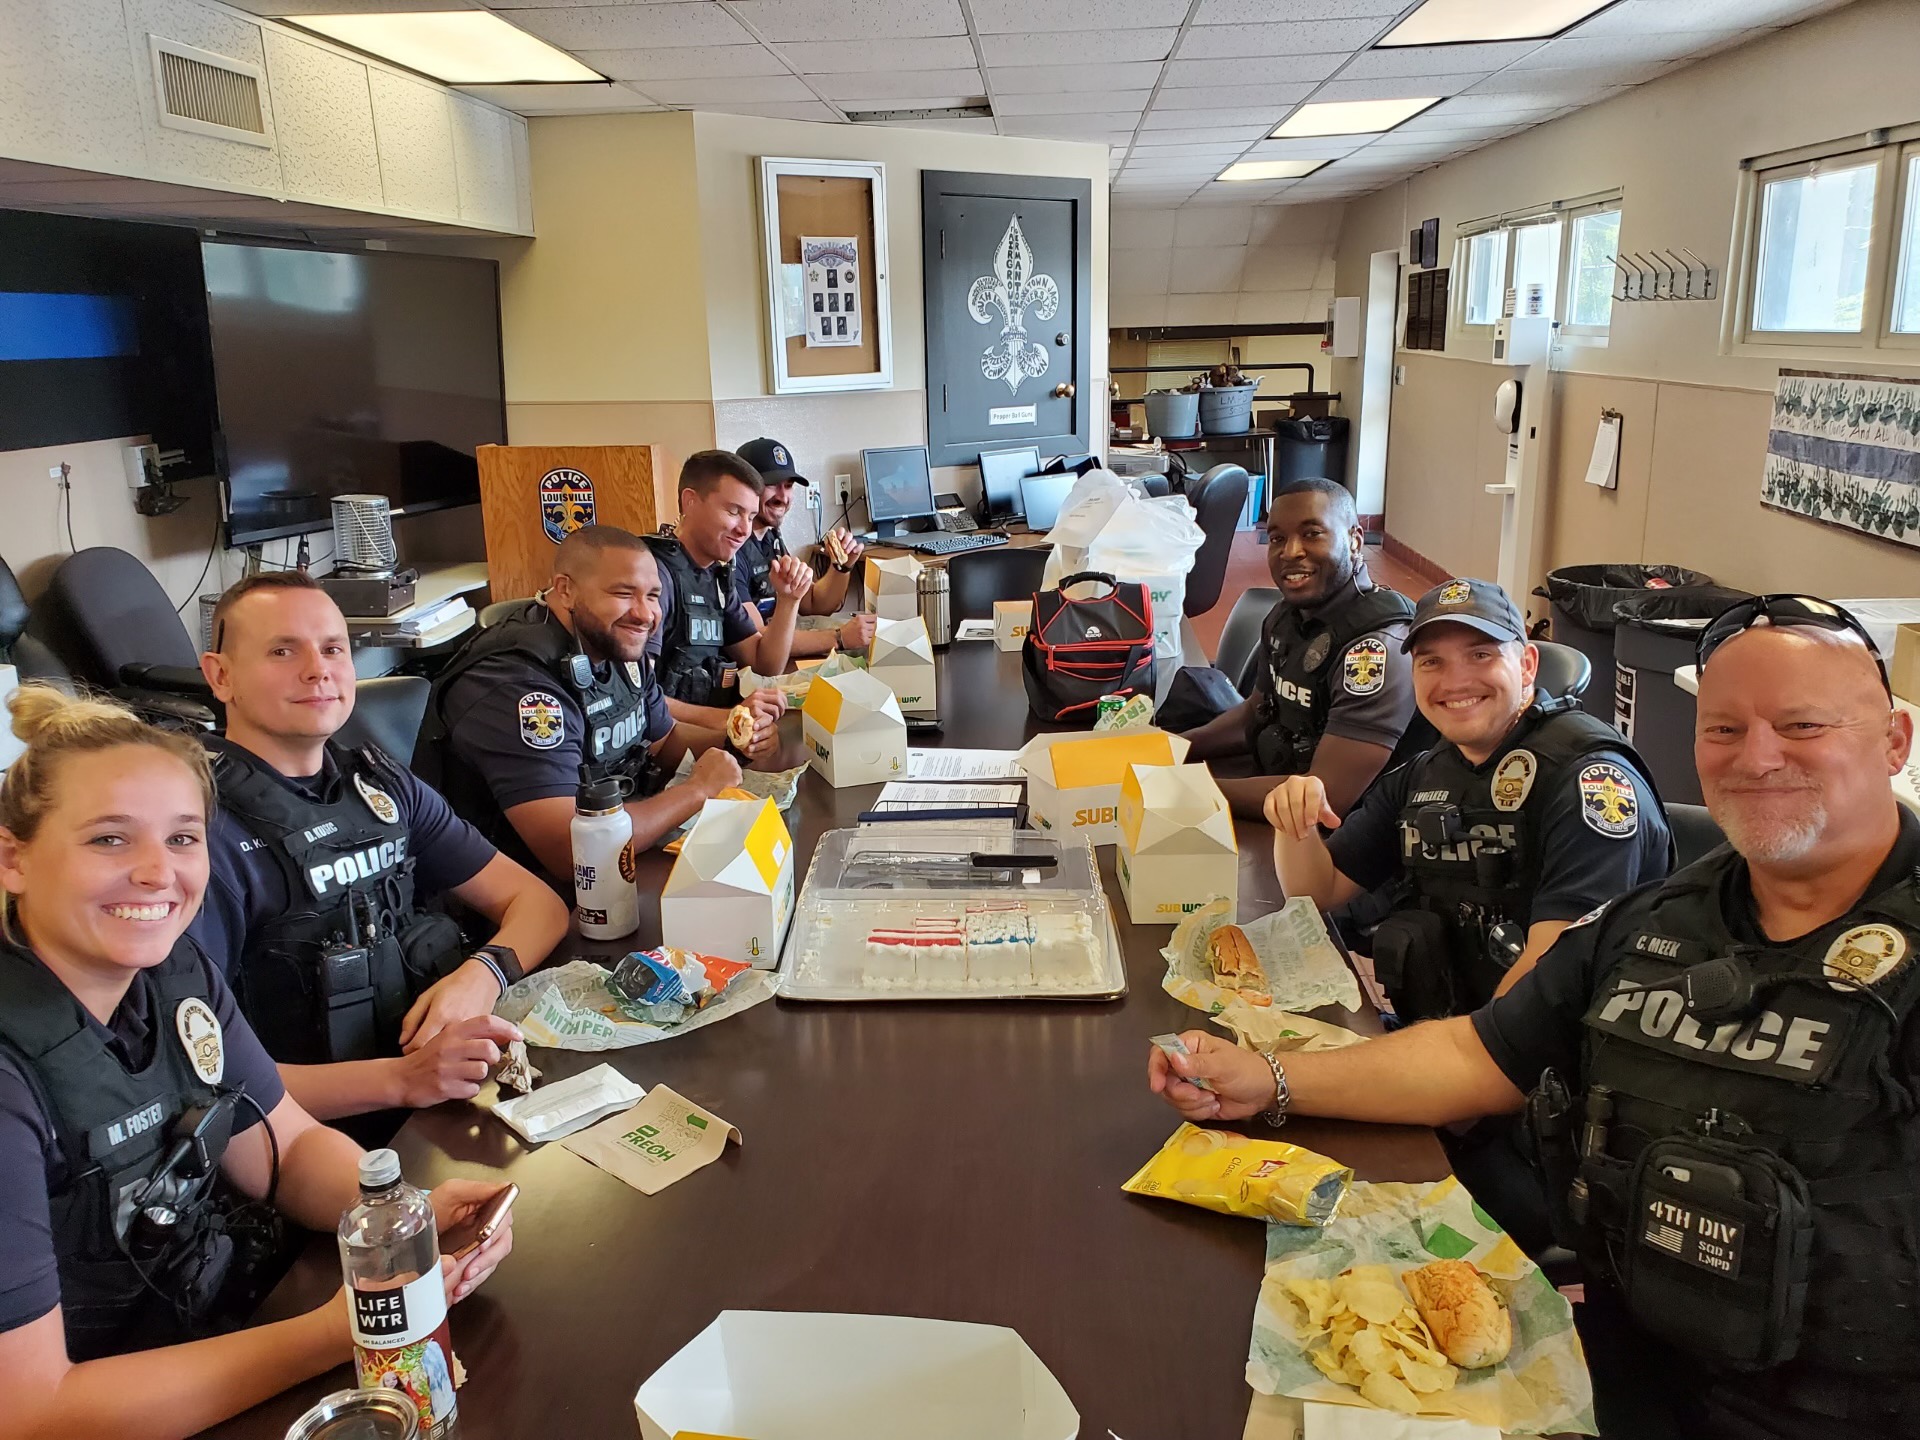 First responders enjoying their lunch